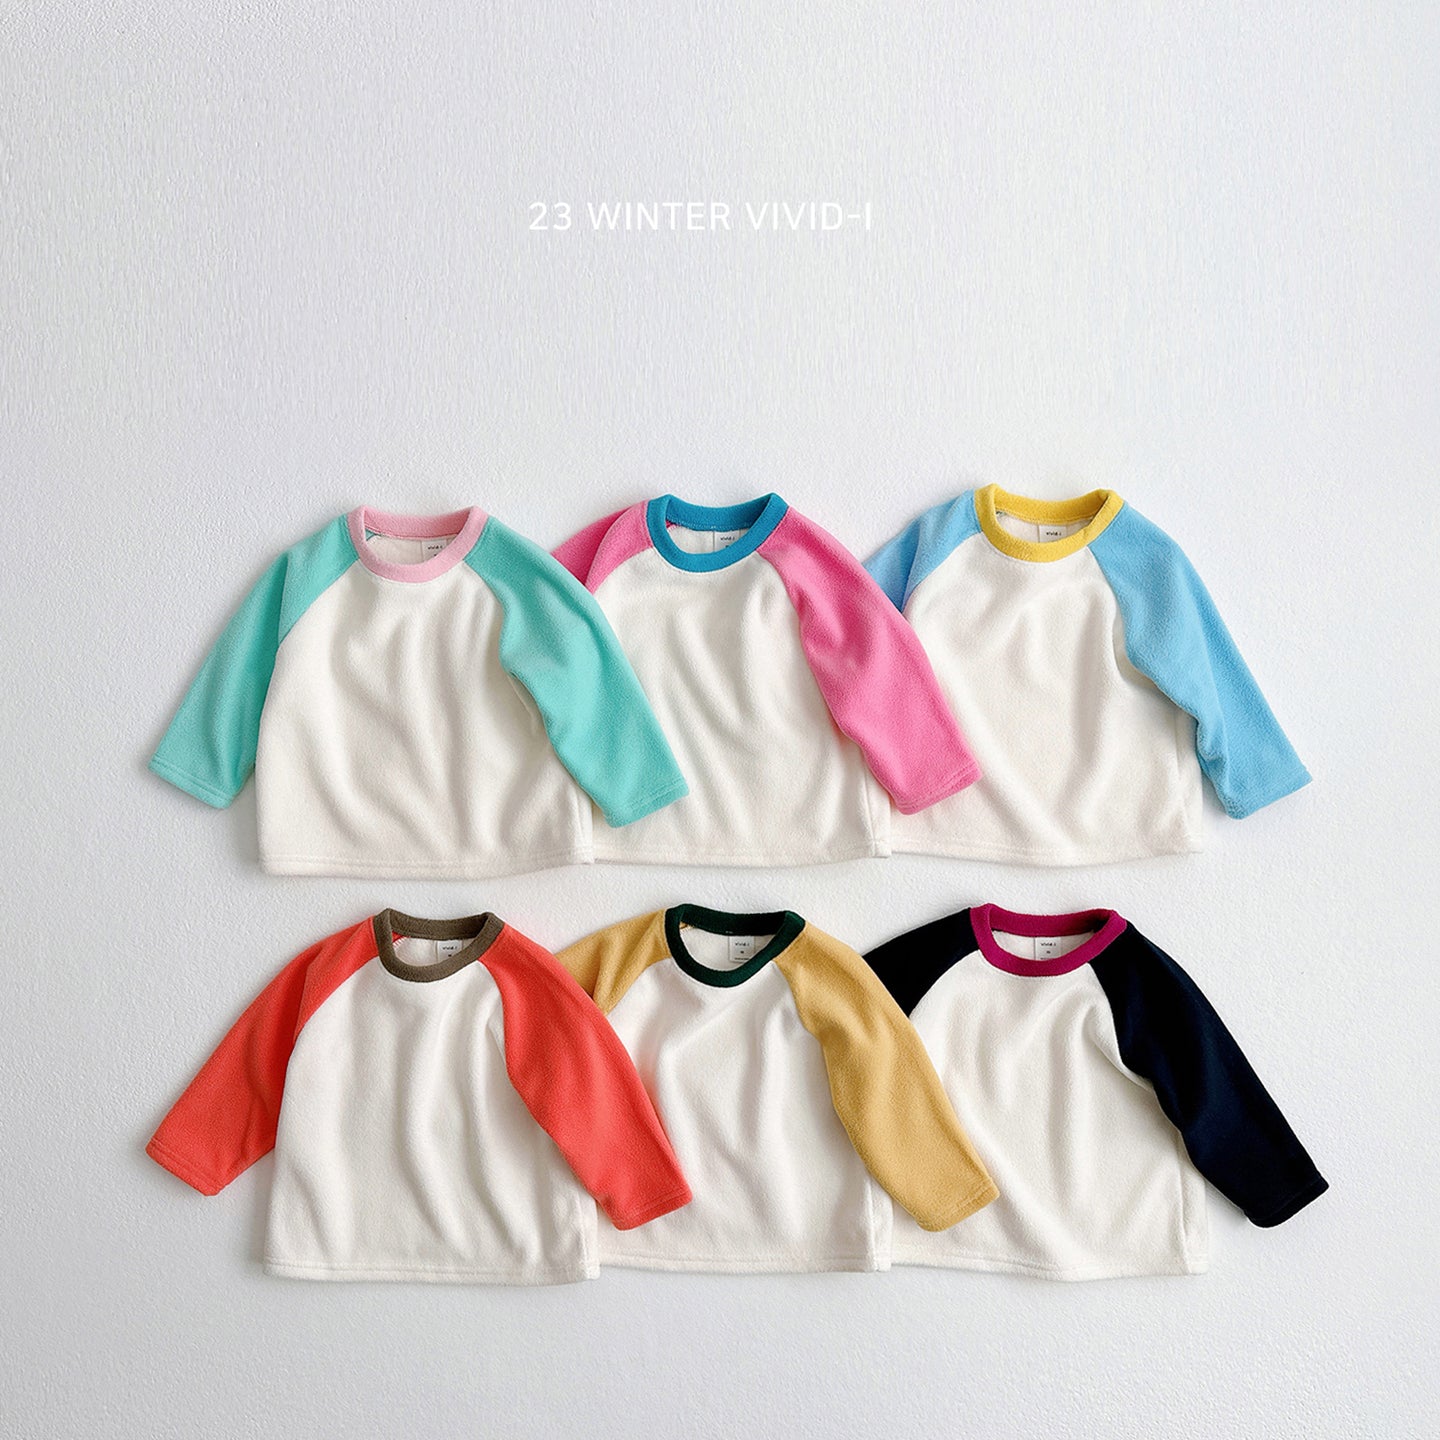 VIVID KIDS Colour Block Tee Shirt*preorder